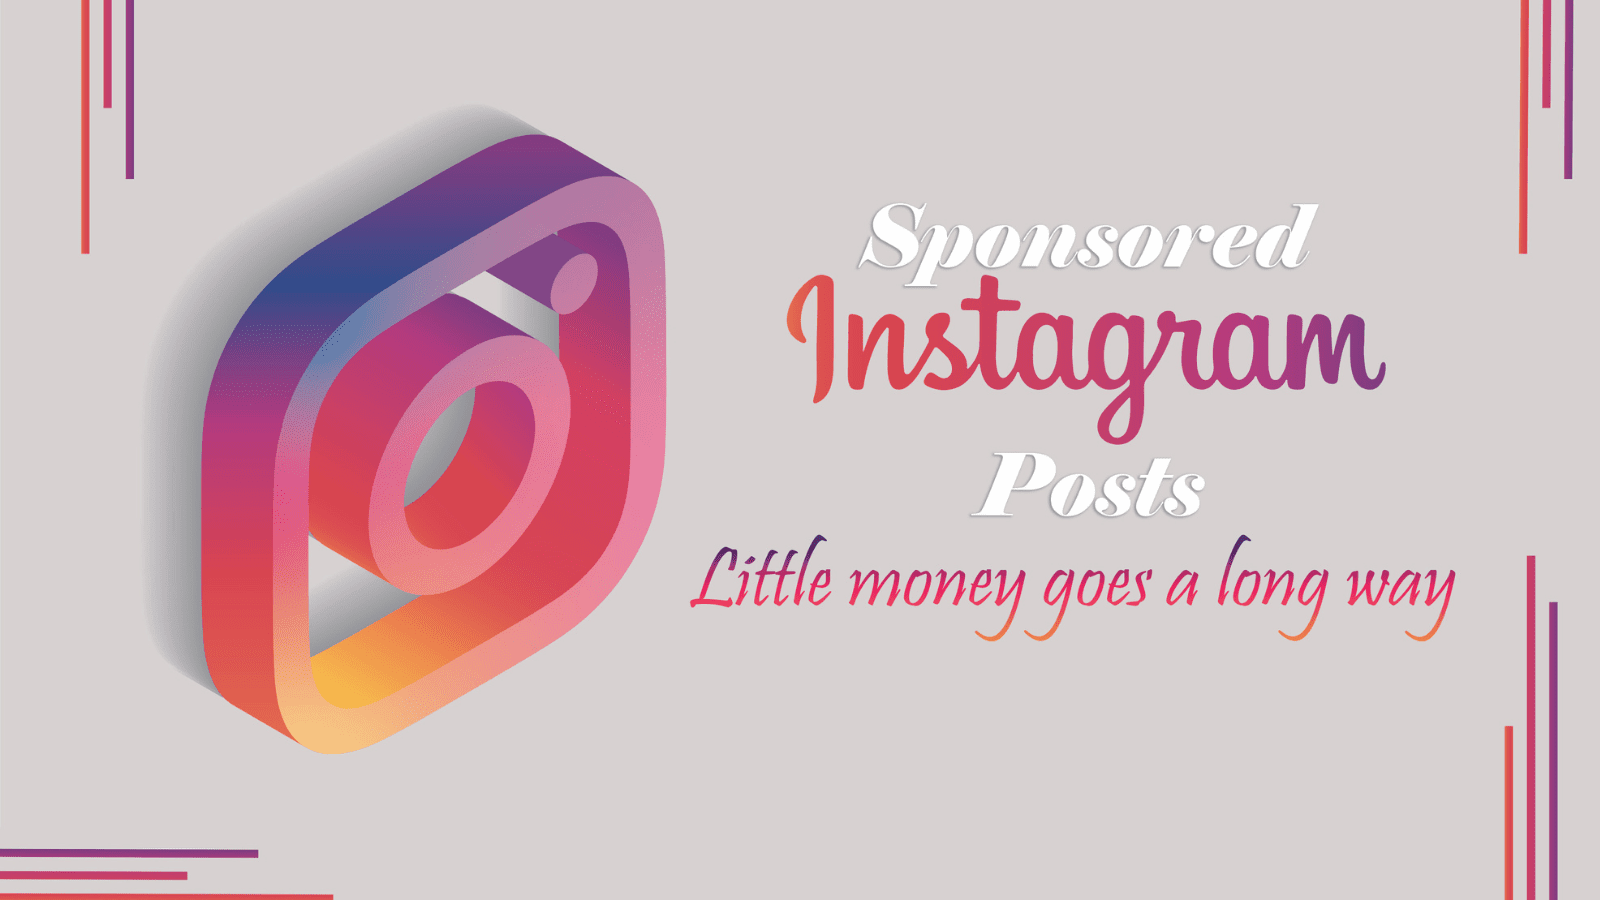 Sponsored Instagram Posts: Little money goes a long way.